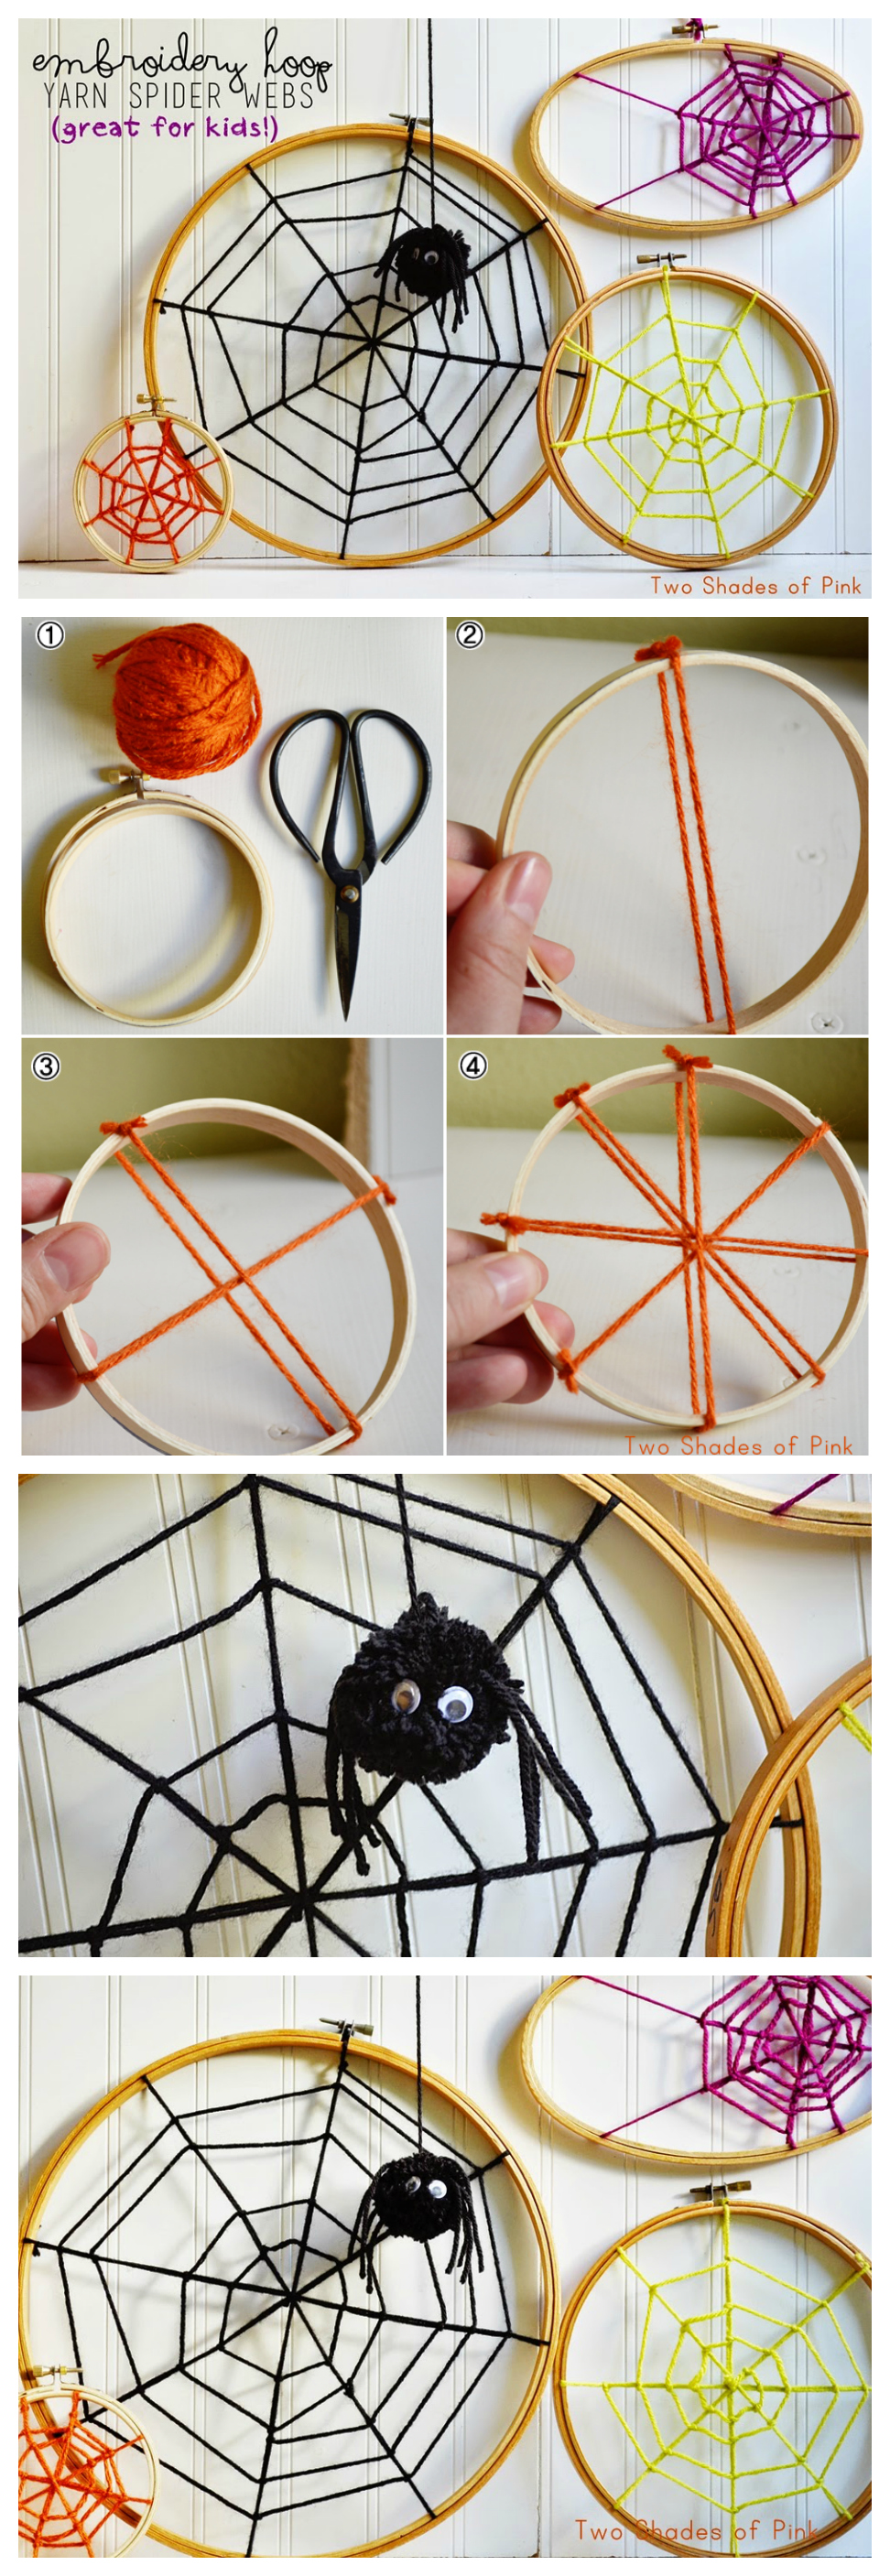 Embroidery Hoop Spider Webs | Halloween Decorations